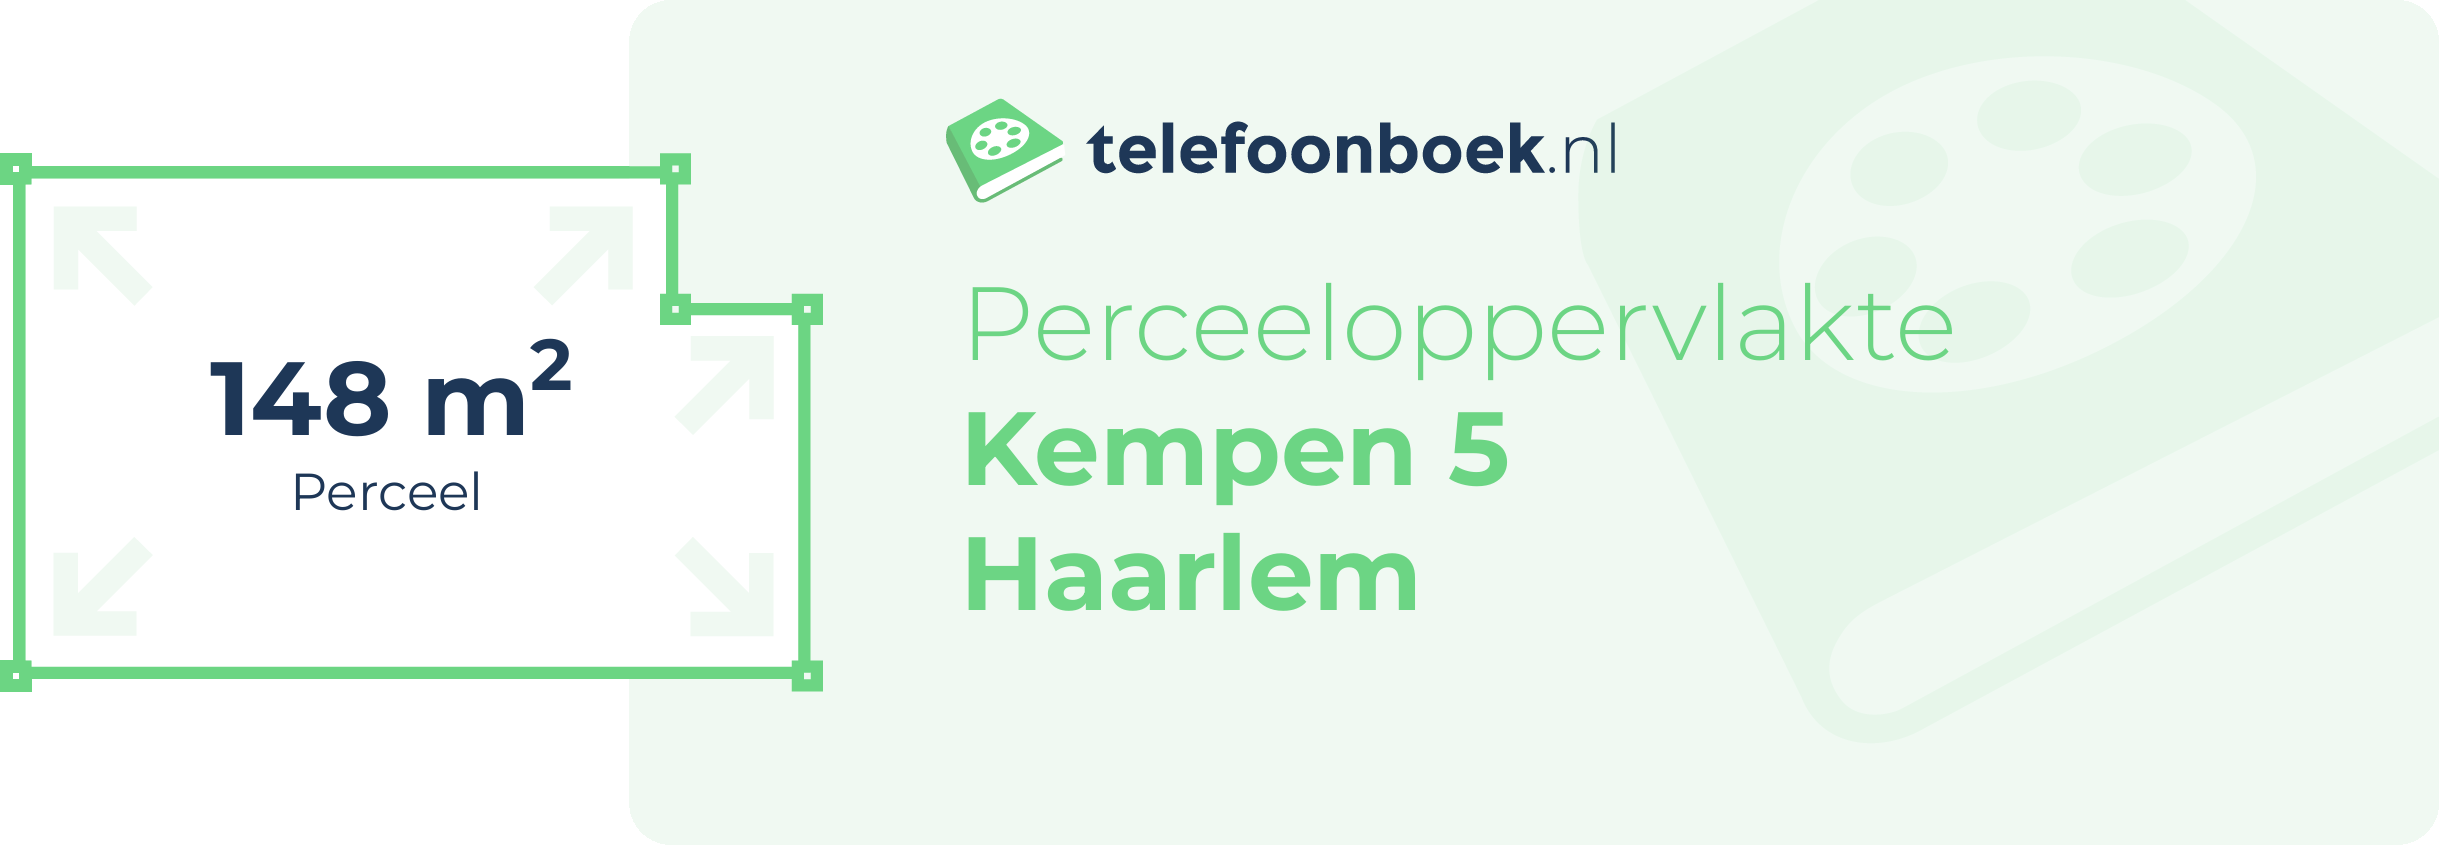 Perceeloppervlakte Kempen 5 Haarlem